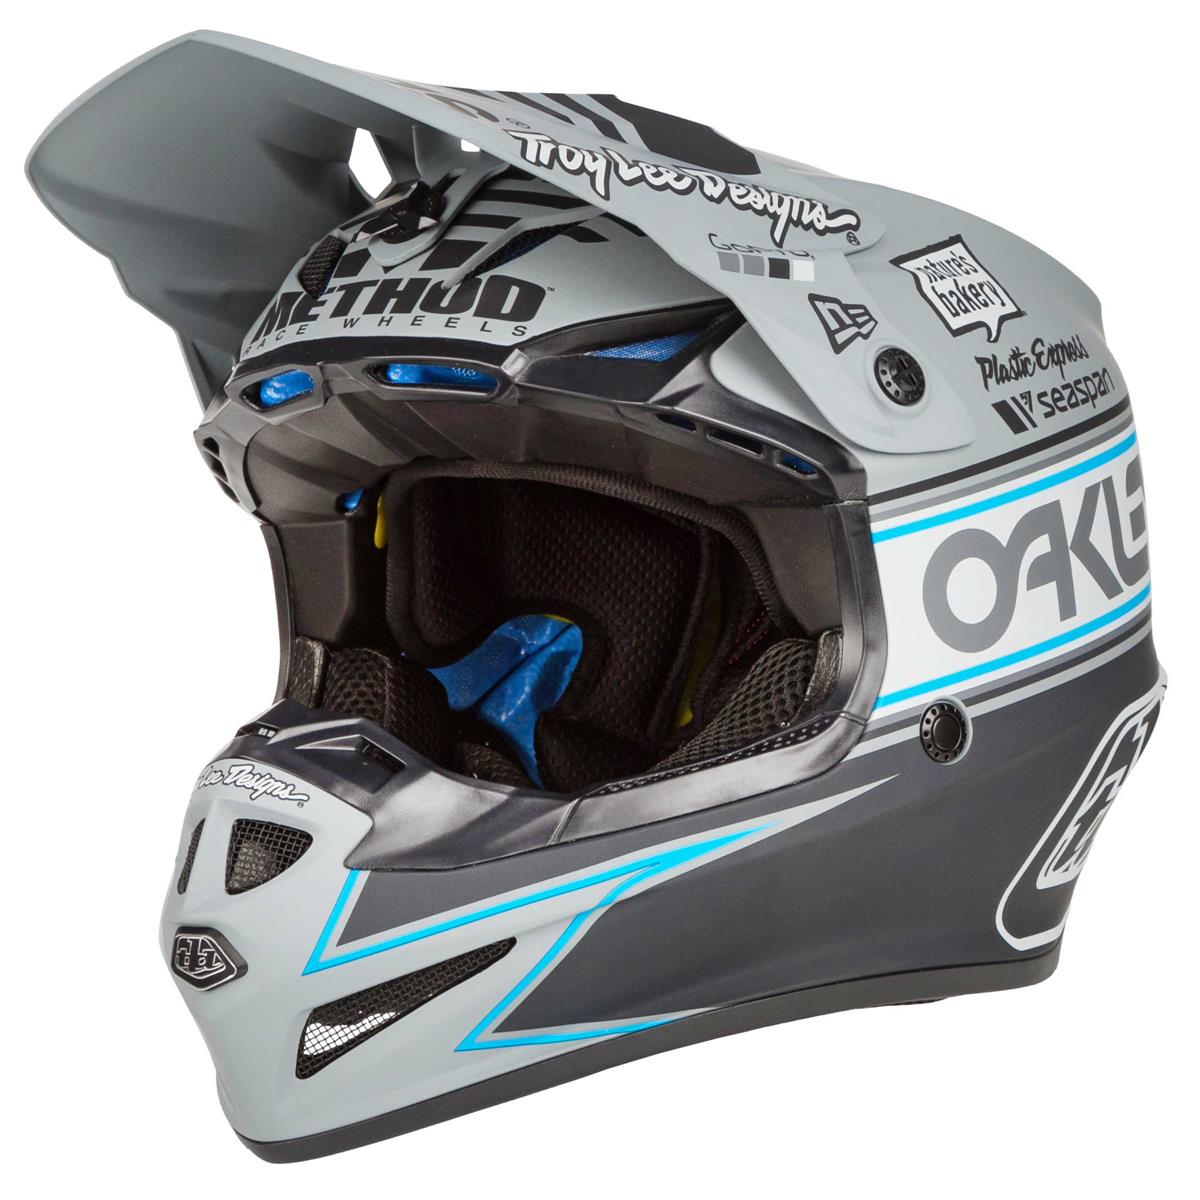 Troy Lee Designs Motocross-Helm SE4 Polyacrylite Team Edition 2 - Grau